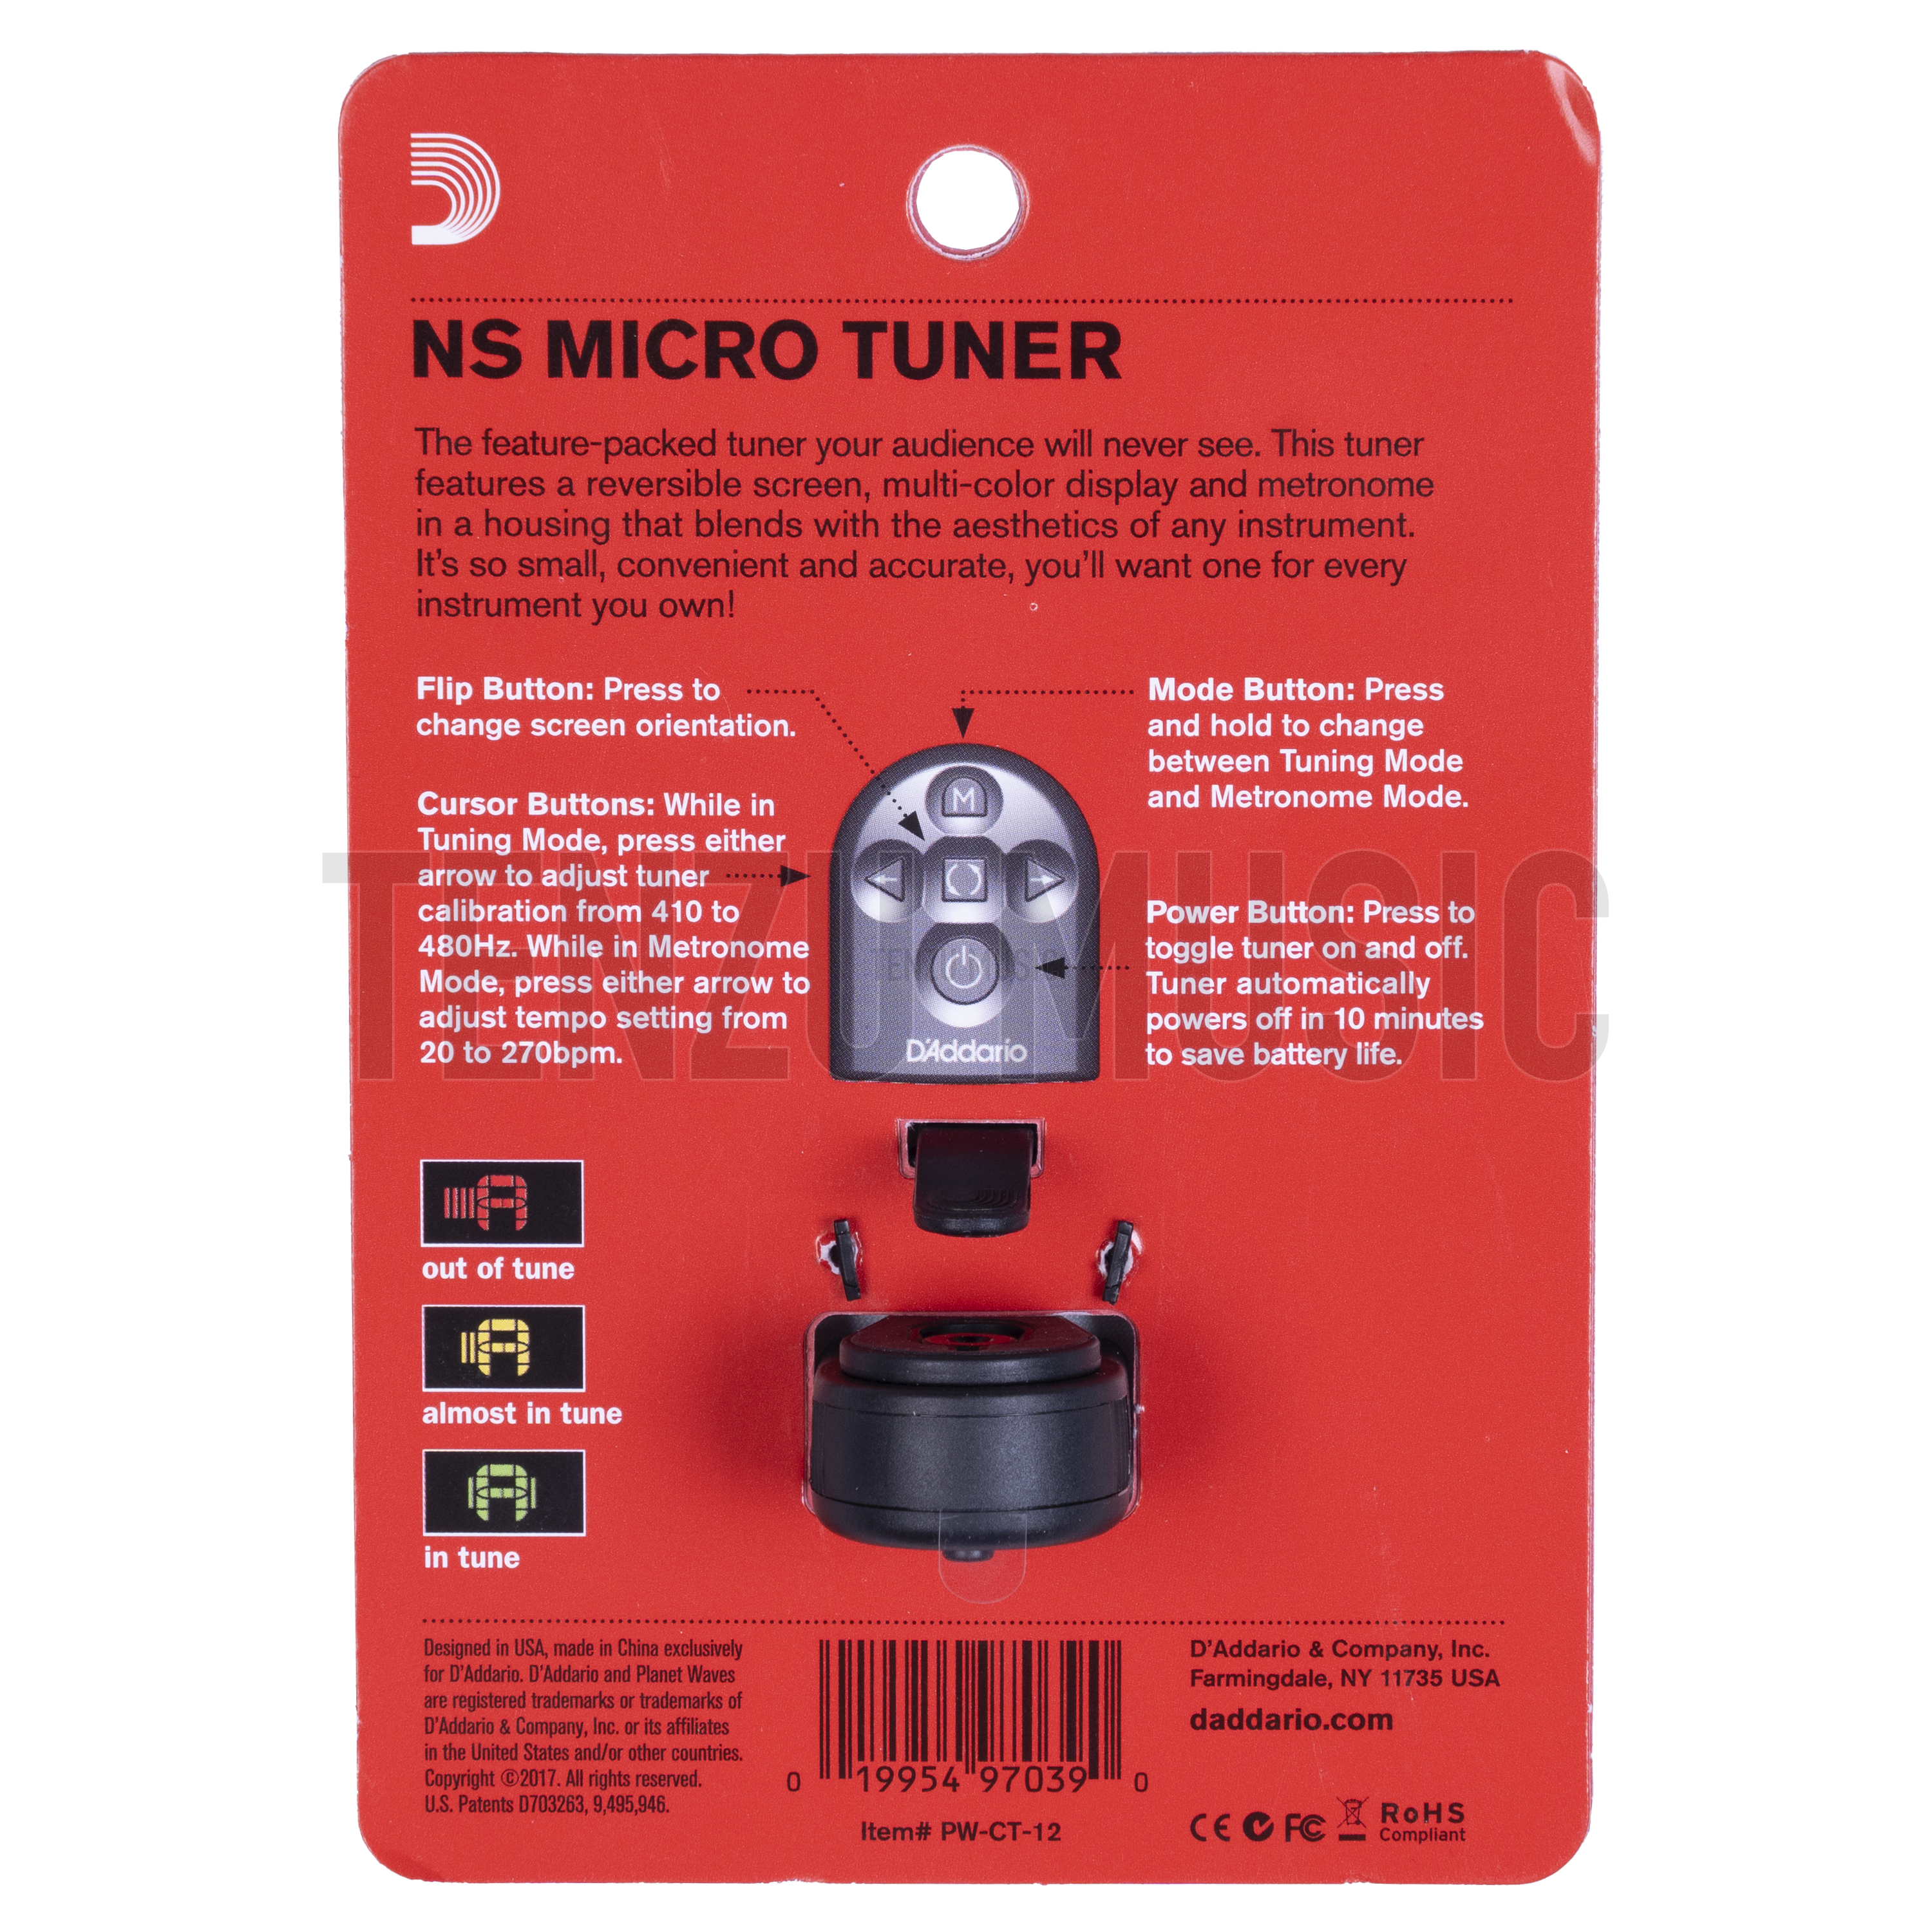 D'Addario NS Micro Headstock Tuner